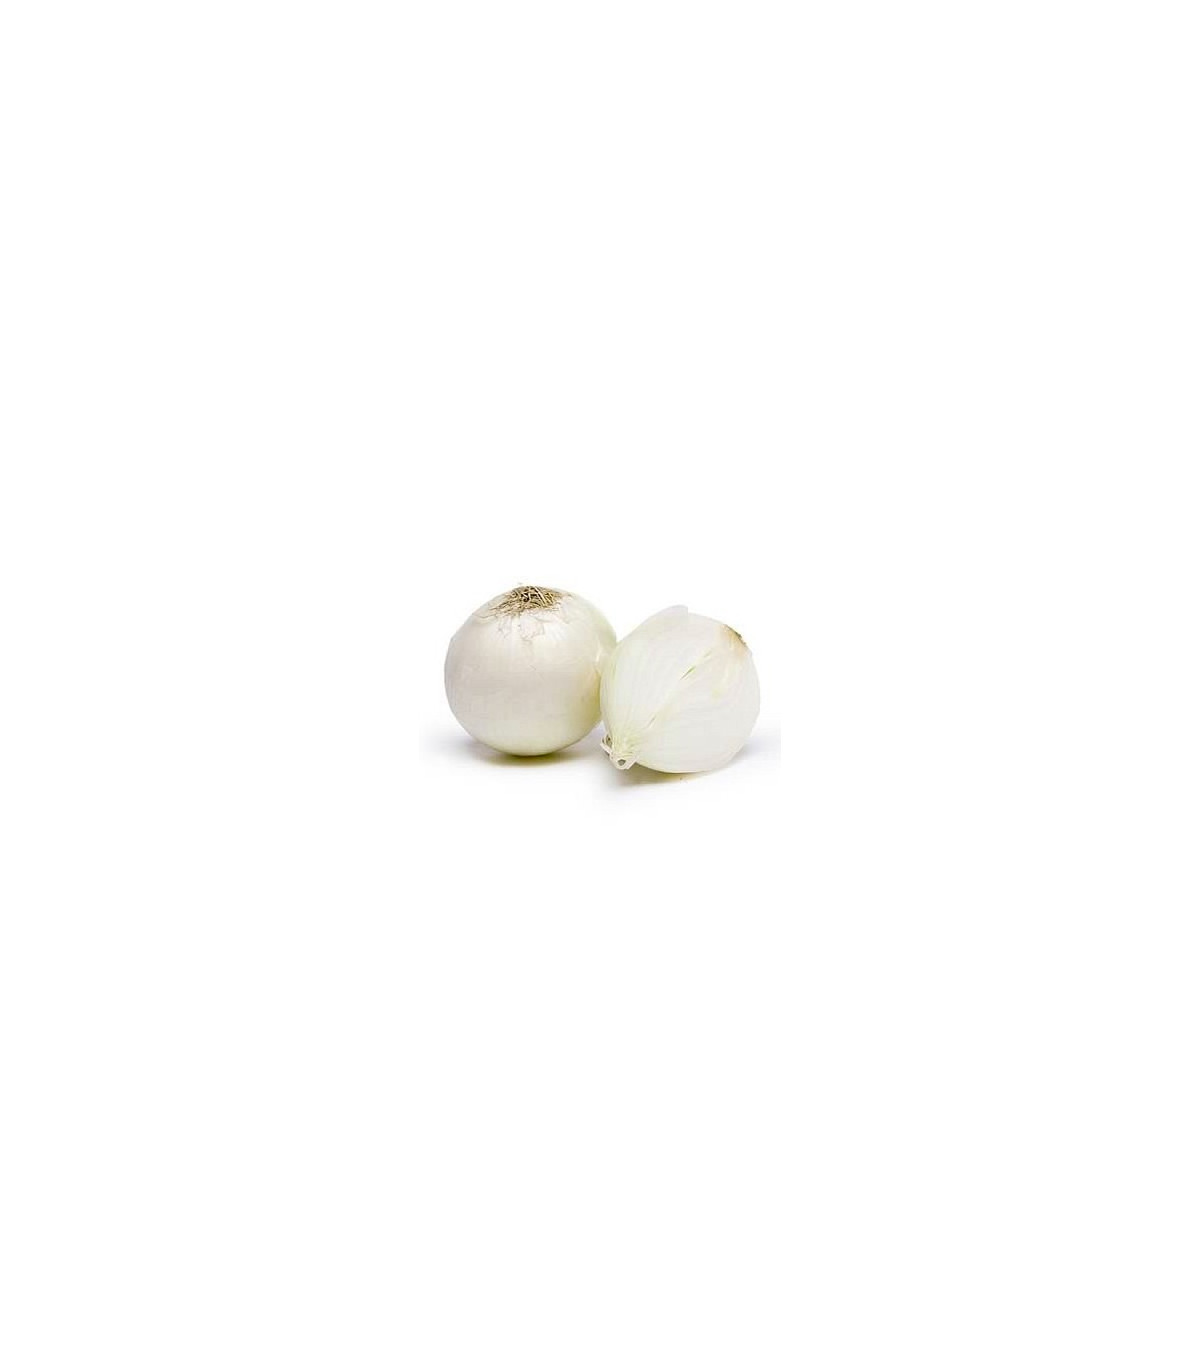 Cibule jarní bílá - semena Cibule - 250 ks 